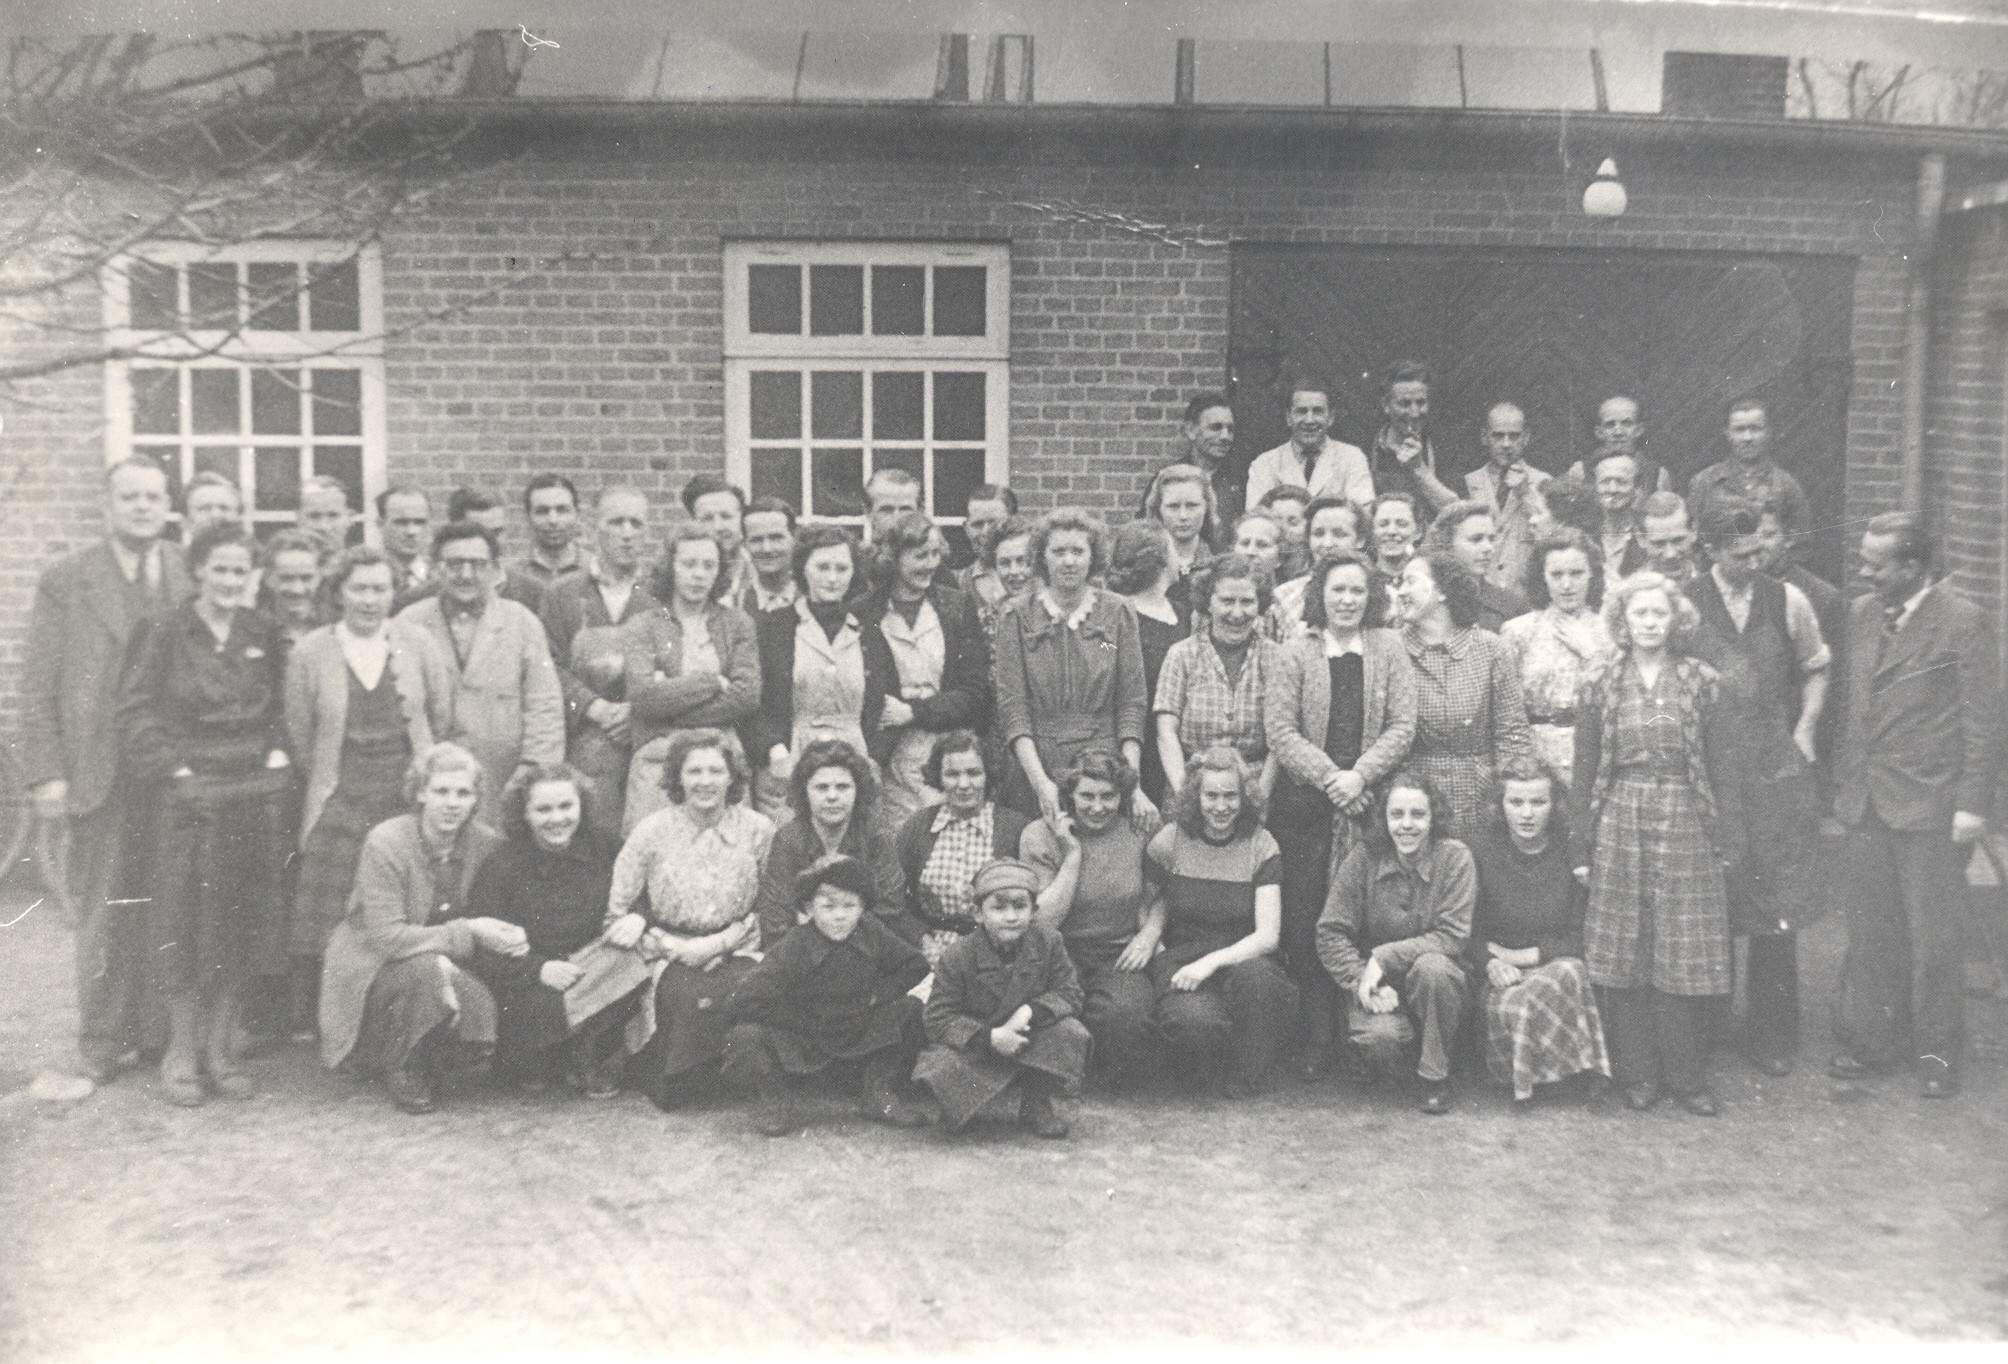 Skotøjsfabrikken Forto, ca. 1940 (B1849)